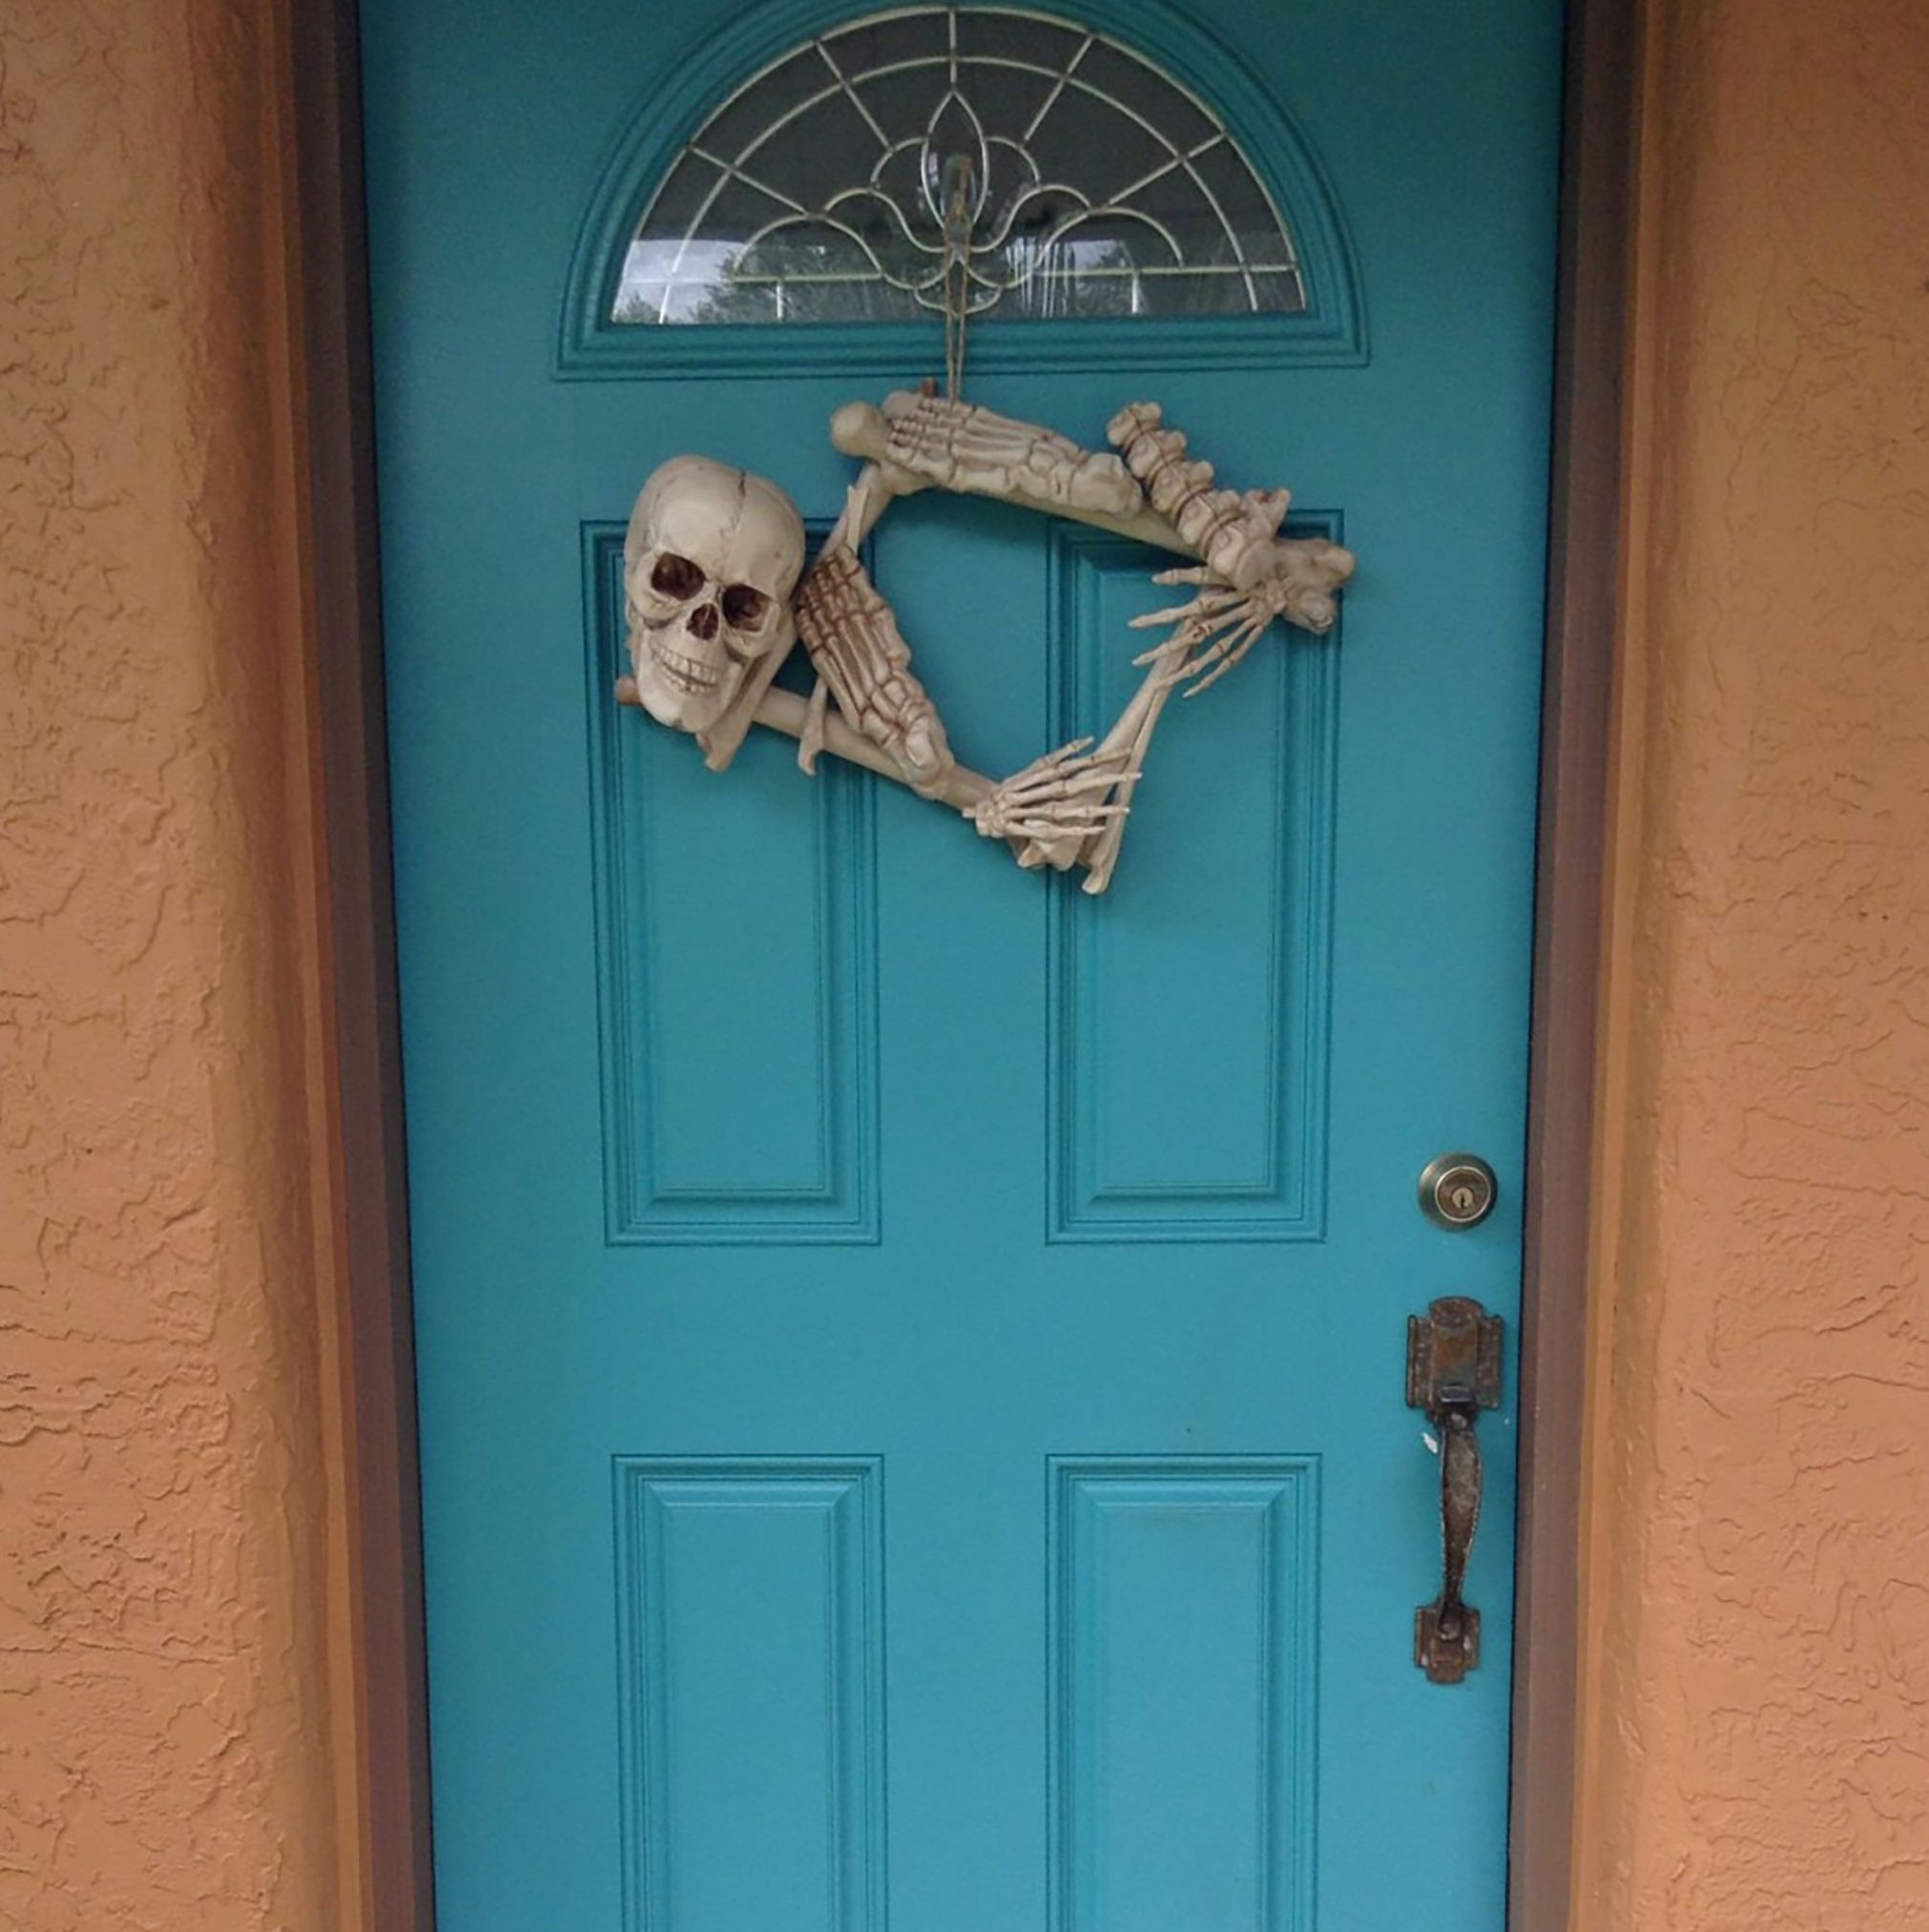 Scary Monsters Inc Door Decorations